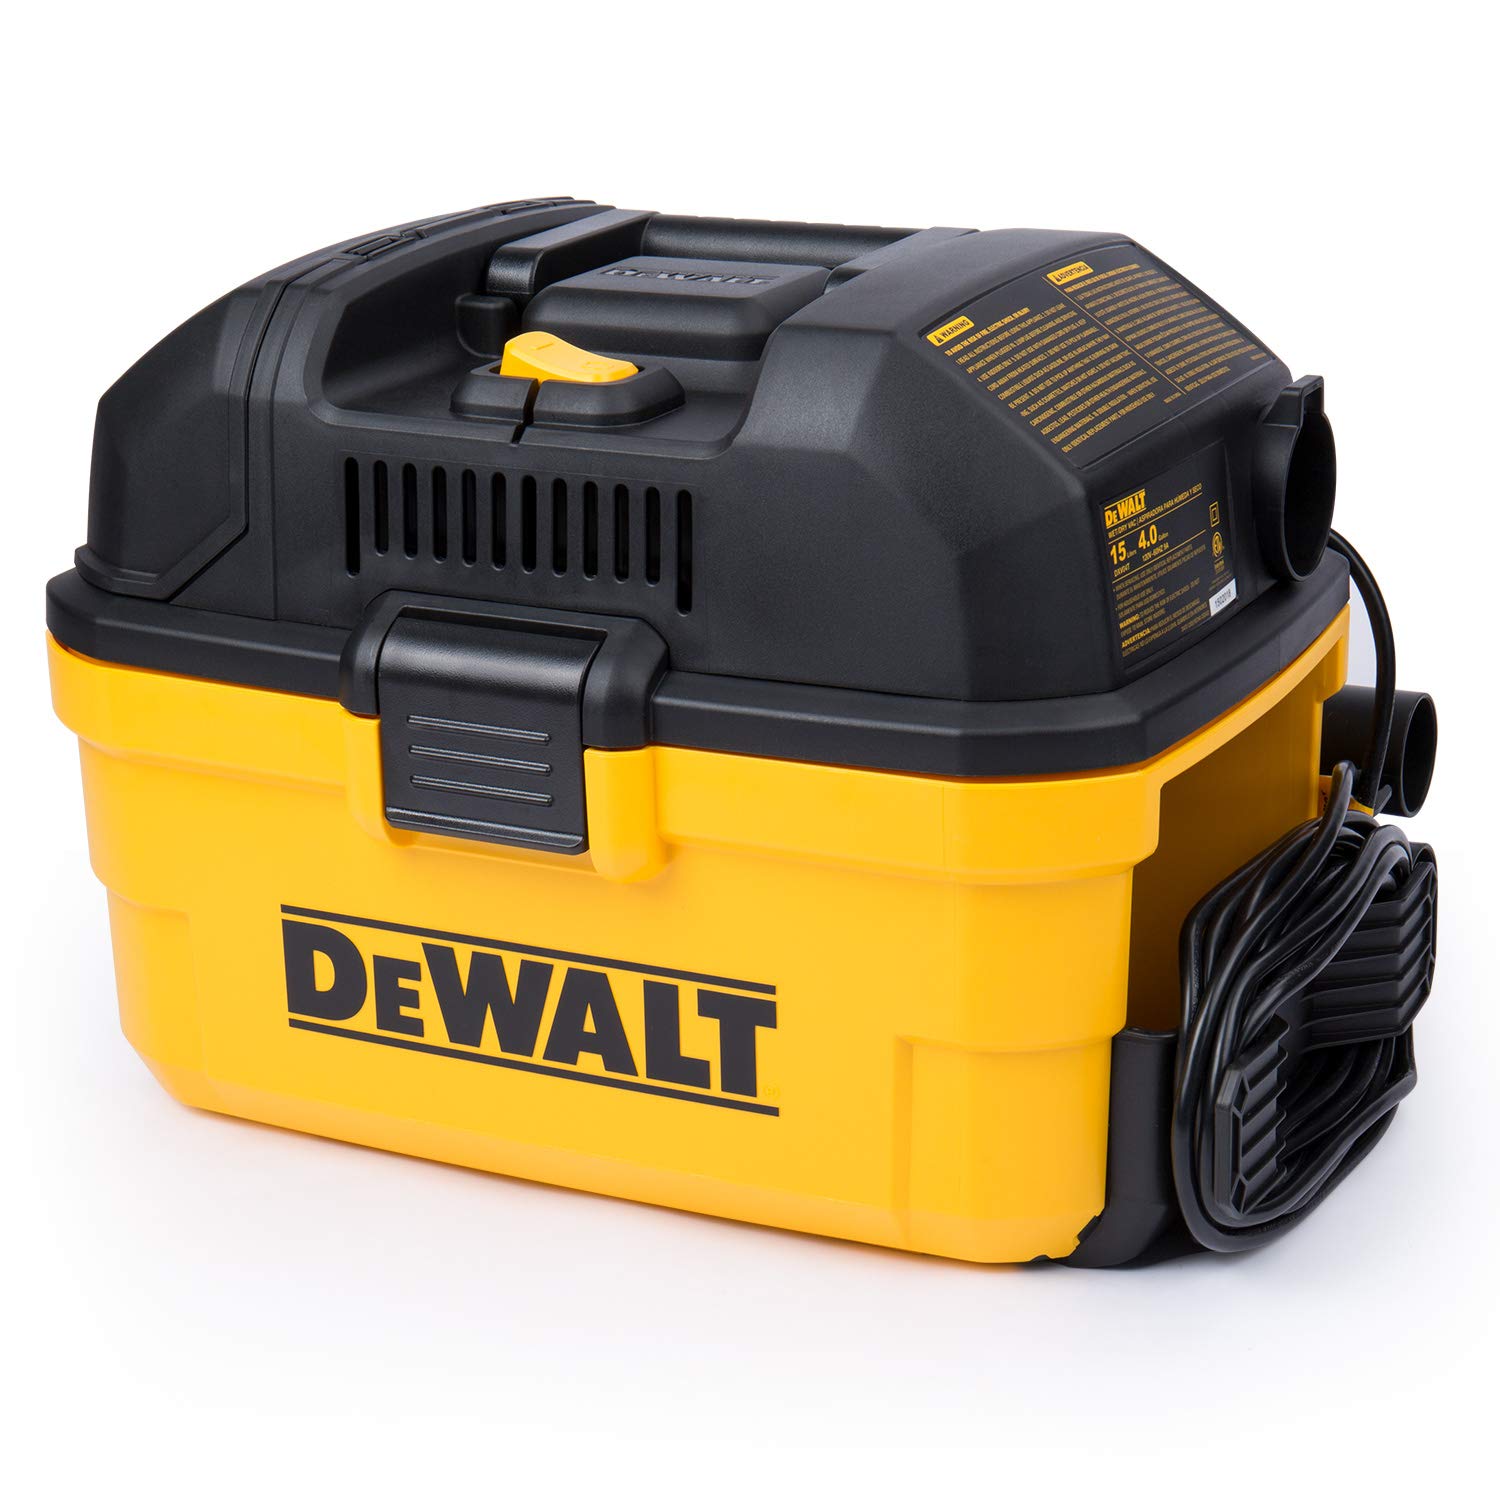 DEWALT Portable 4 Gallon Wet/Dry Vaccum, Yellow & Craftsman CMXZVBE38725 1-7/8 in. Dusting Brush Wet/Dry Vac Attachment